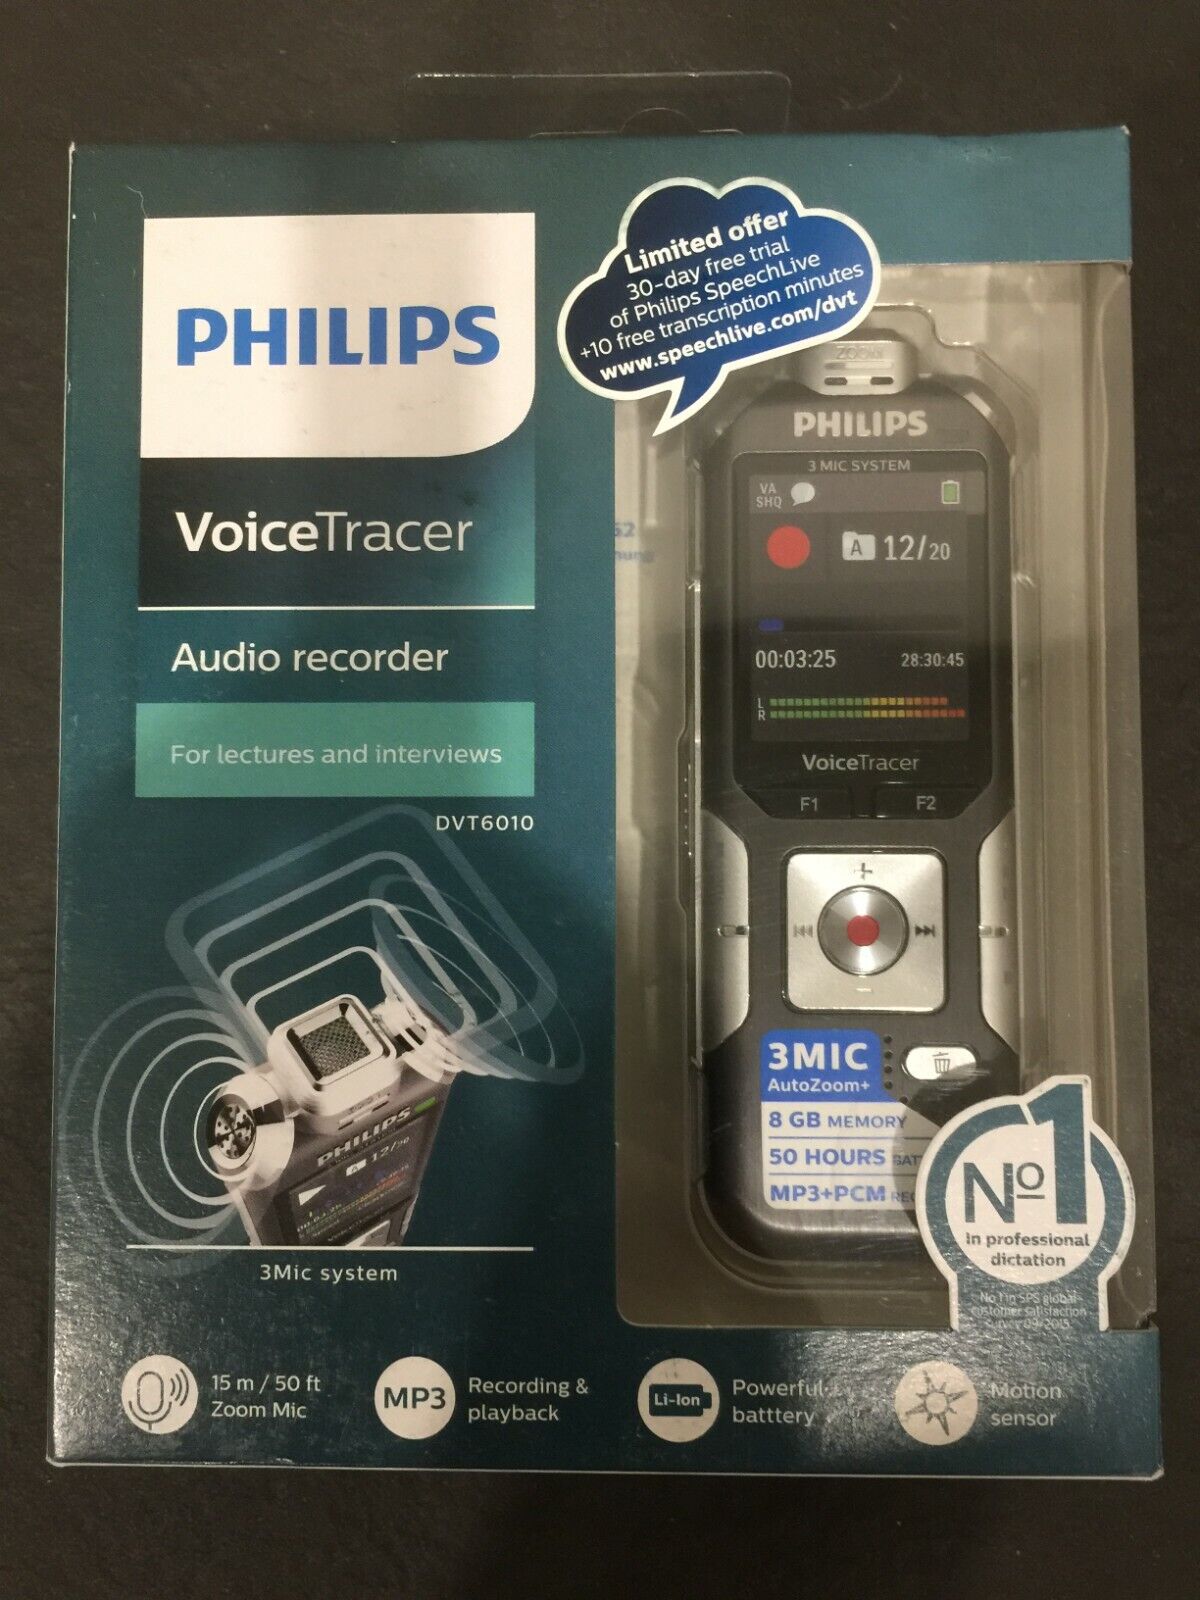 PHILIPS Voice Tracer VoiceTracer Digital AUDIO RECORDER DVT6010 8GB Memory - NIB